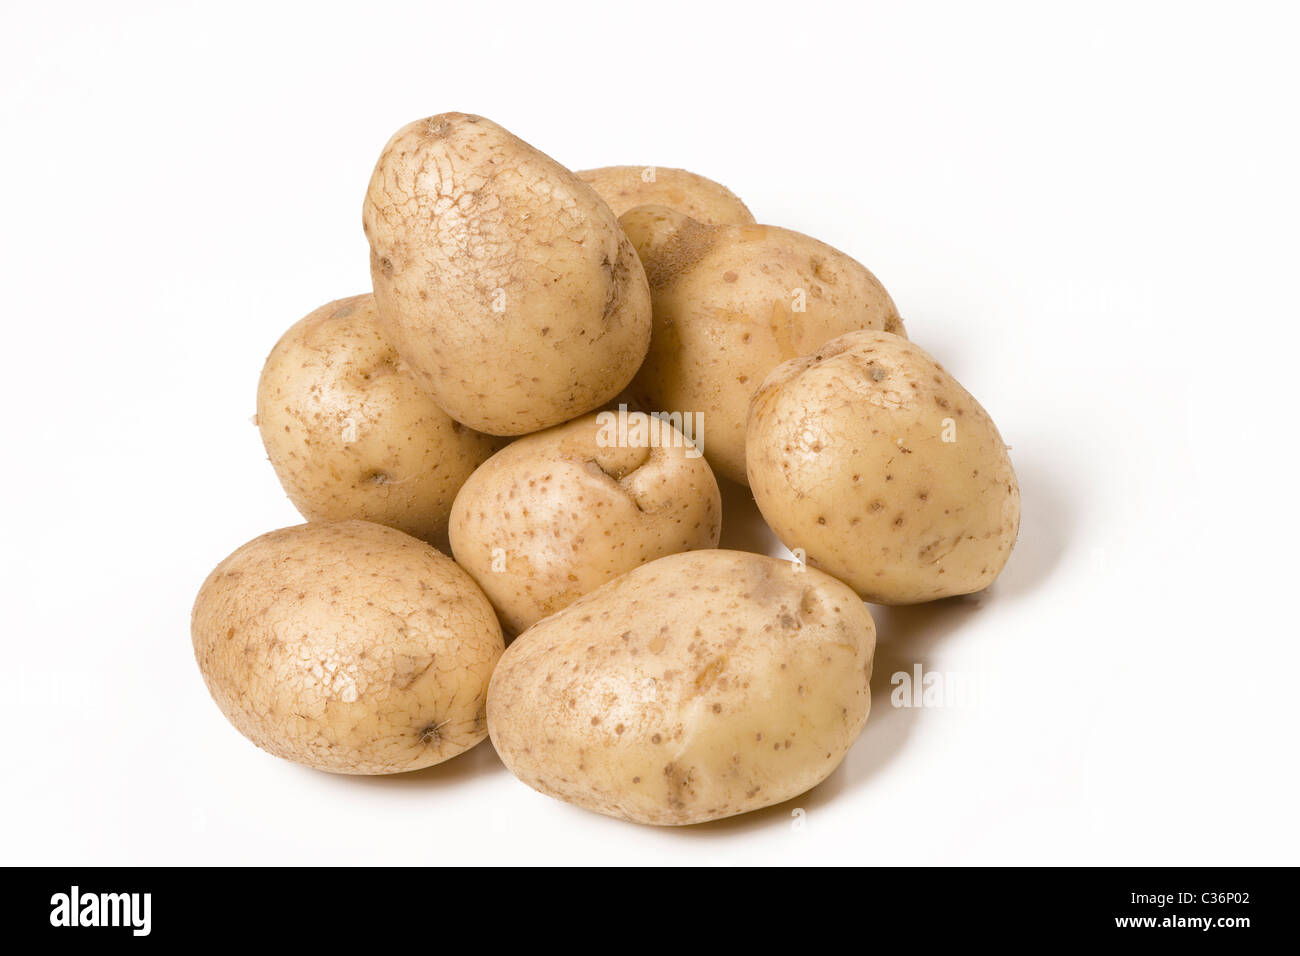 vegetarian food, new potatoes on white background Stock Photo